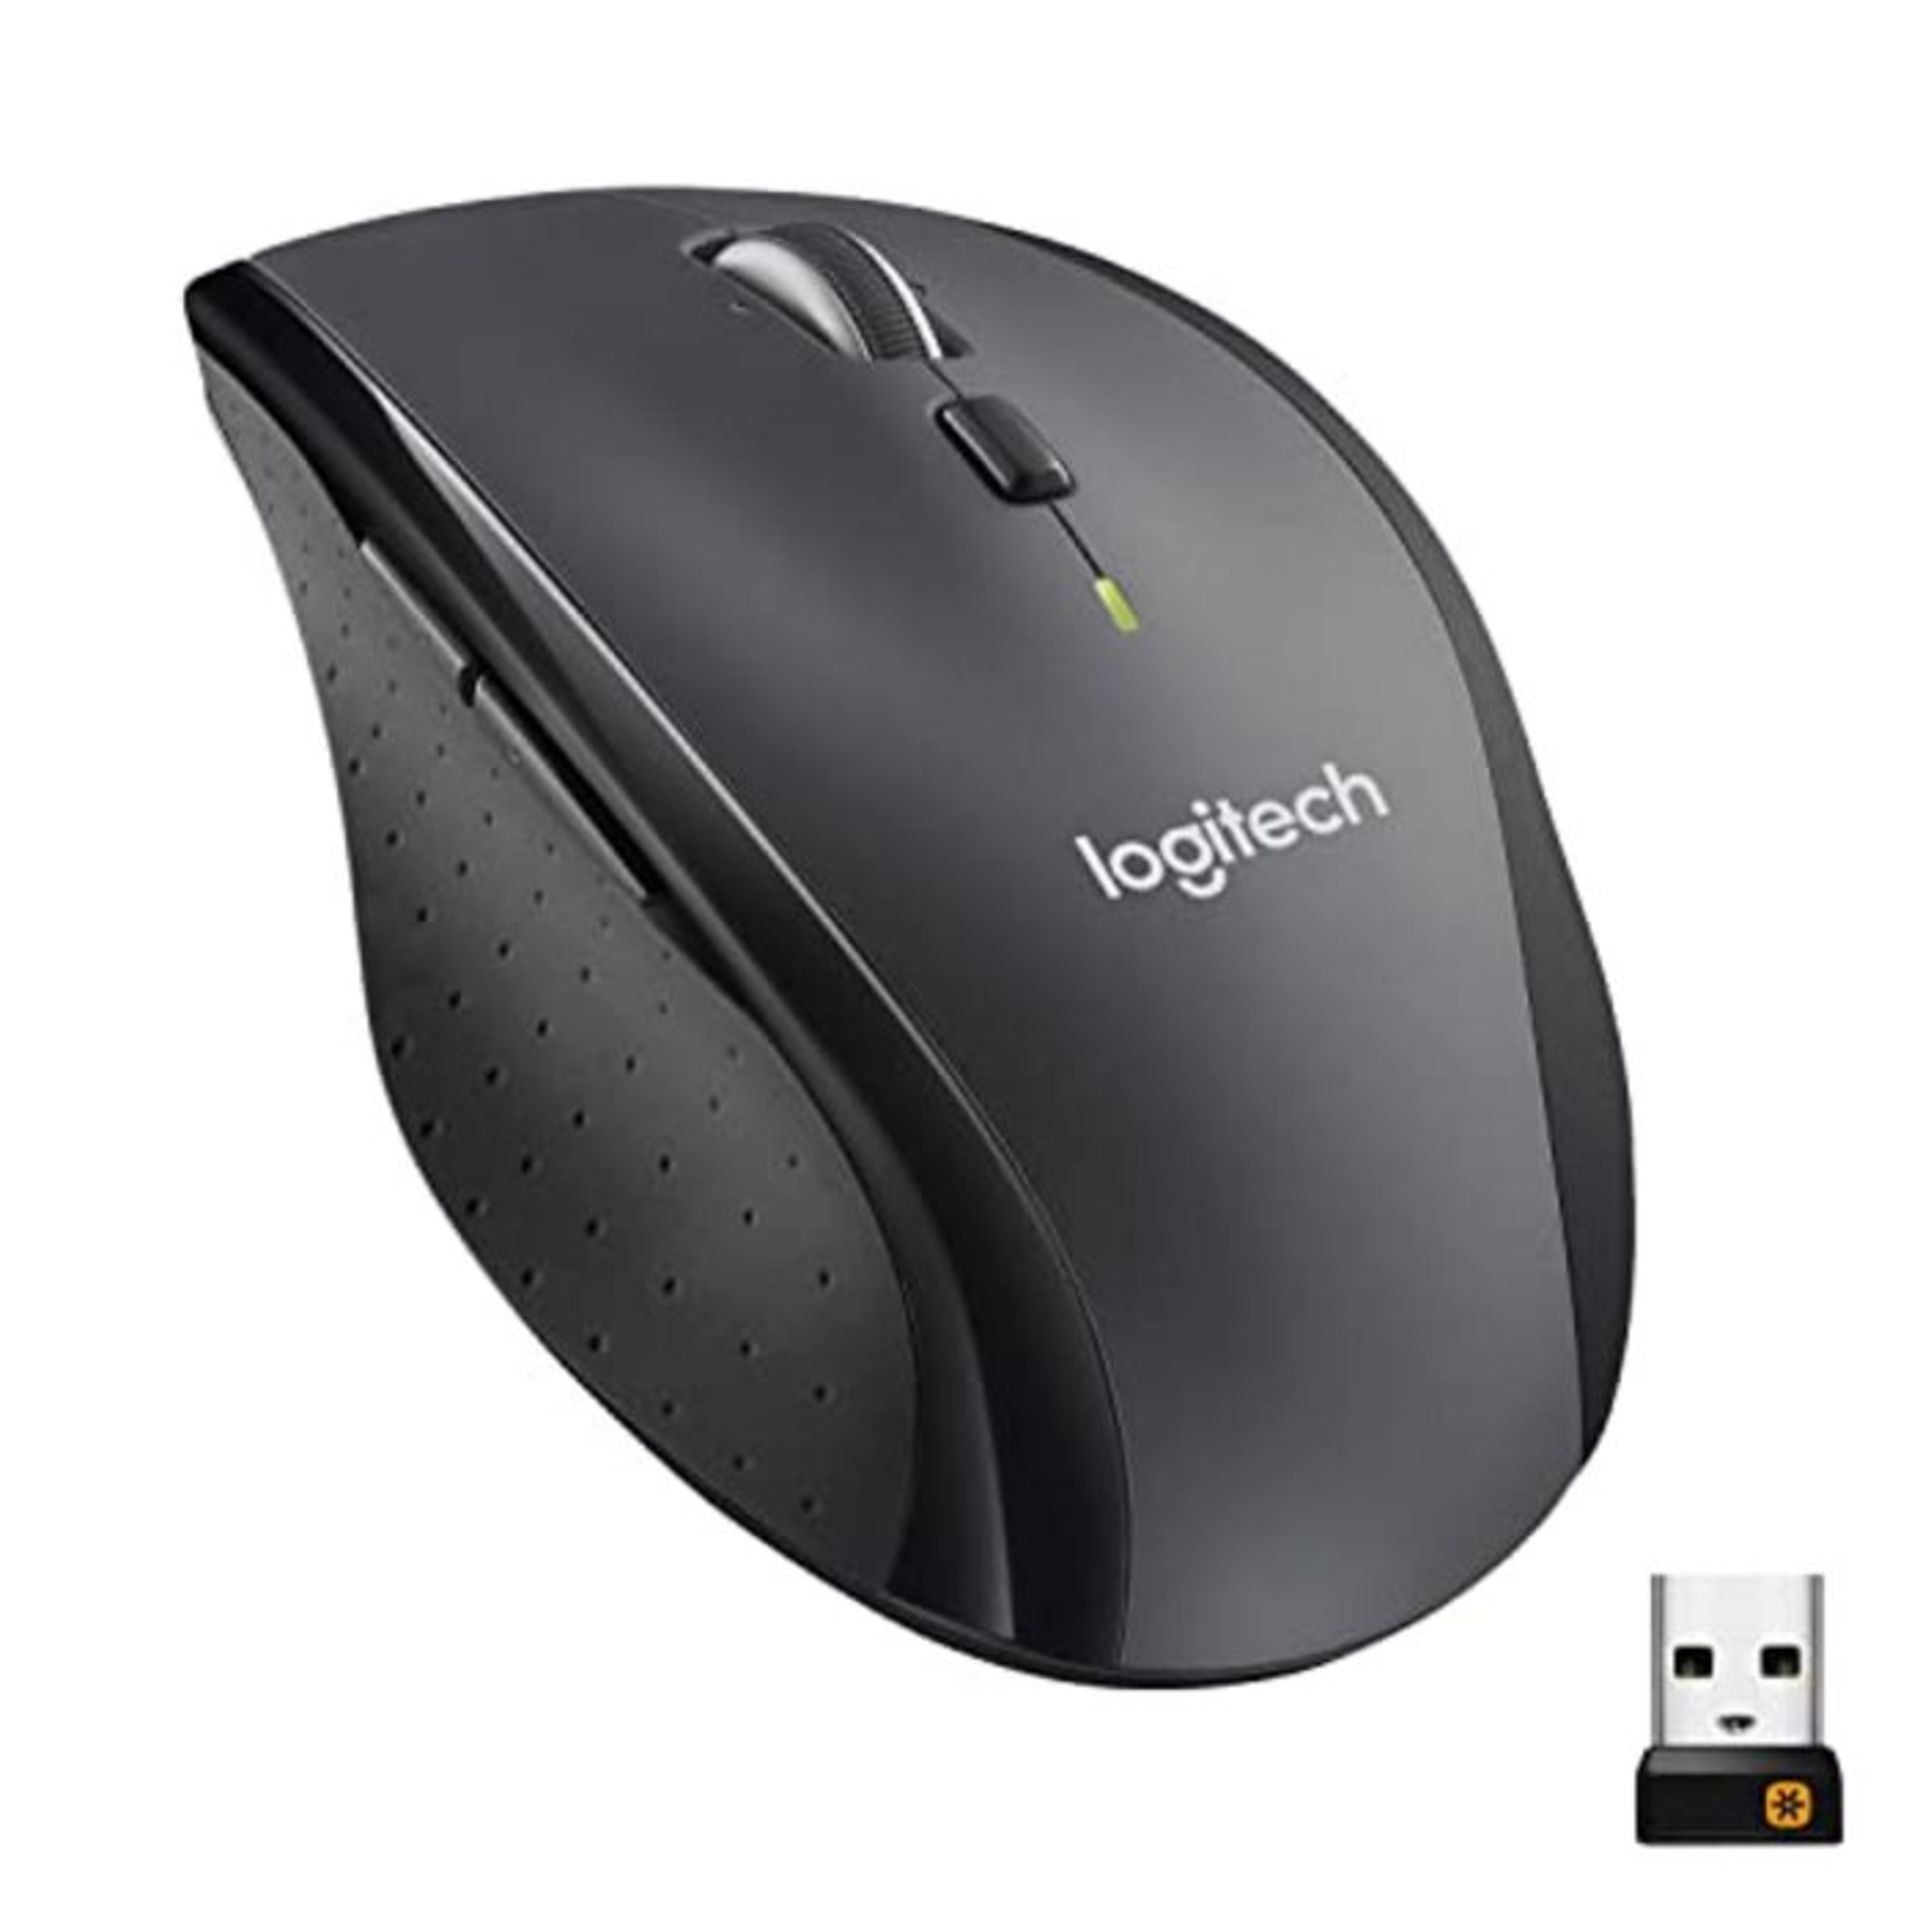 Logitech M705 Marathon Wireless Mouse, 2.4 GHz USB Unifying Receiver, 1000 DPI, 5-Prog